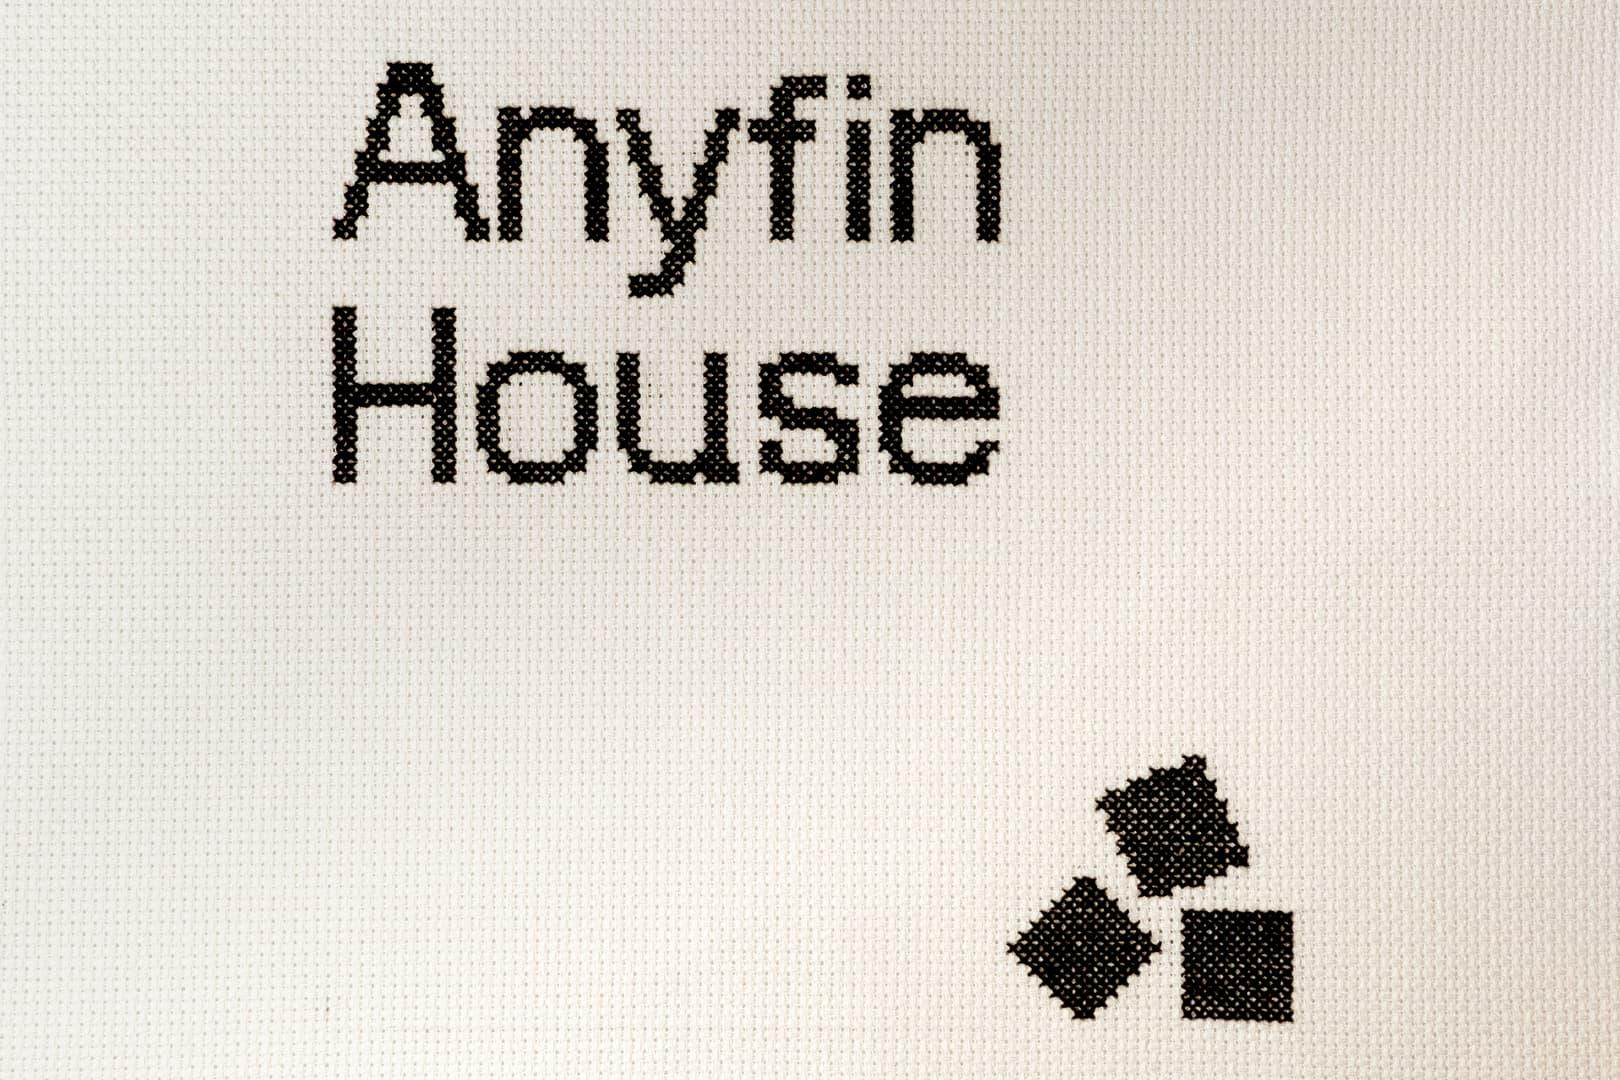 Texten Anyfin House broderat på ett vitt tyg.